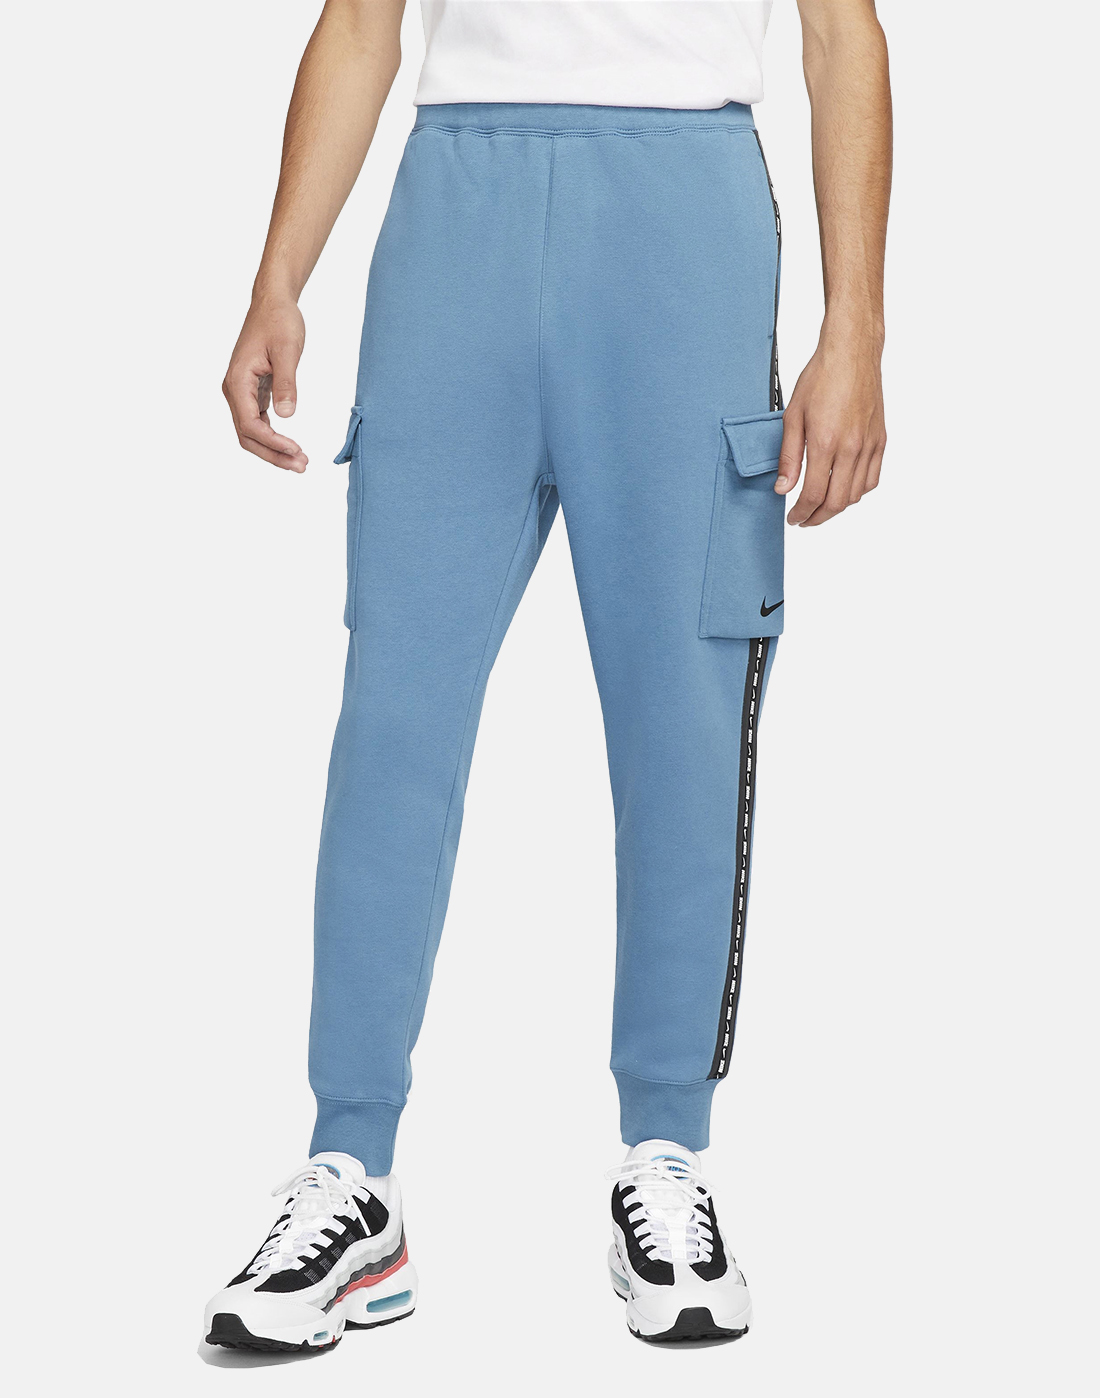 Nike Mens Repeat Taping Fleece Cargo Pants - Blue | Life Style Sports EU